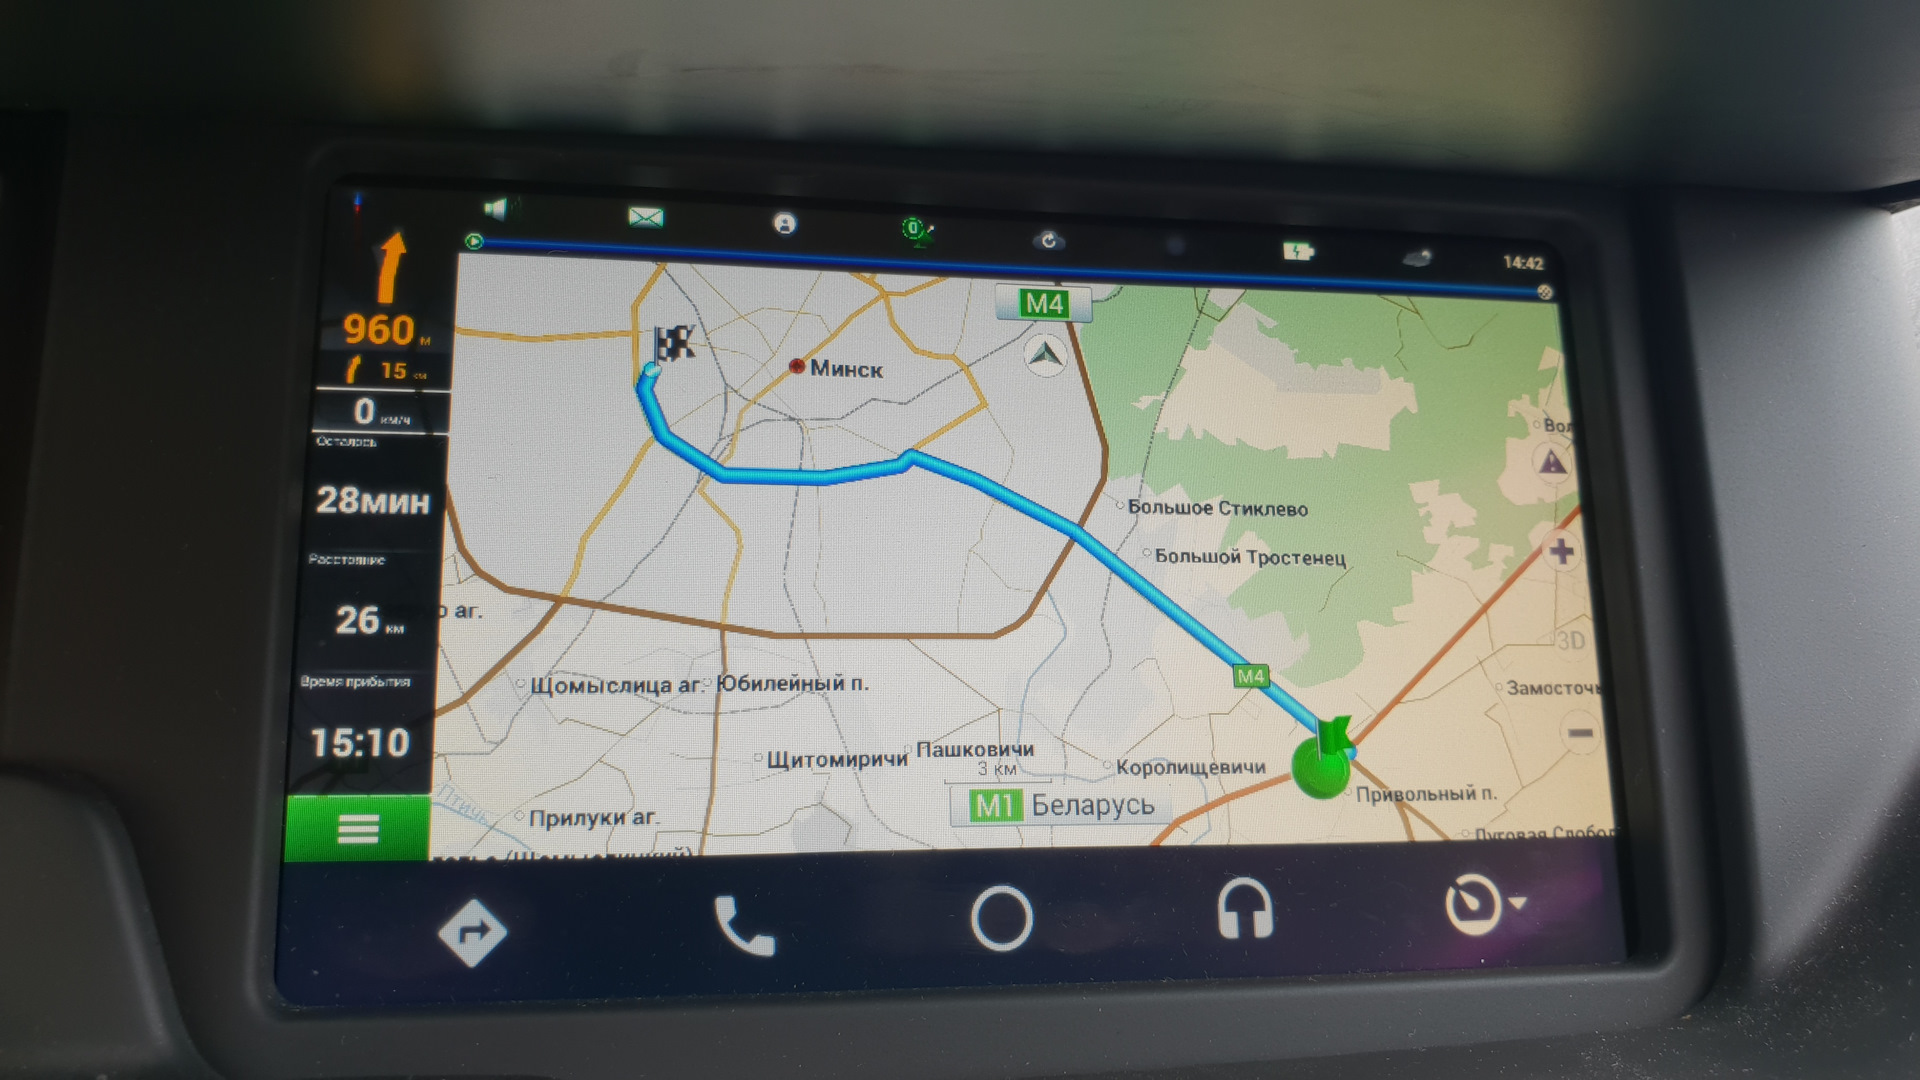 Навител андроид авто. Renault Kangoo 2015 магнитола с навигацией. Renault Scenic 3 магнитола 2015 с навигацией. Магнитола Android с GPS навигацией.экран стекло 2.5d для Рено Логан. Экран навигатора.